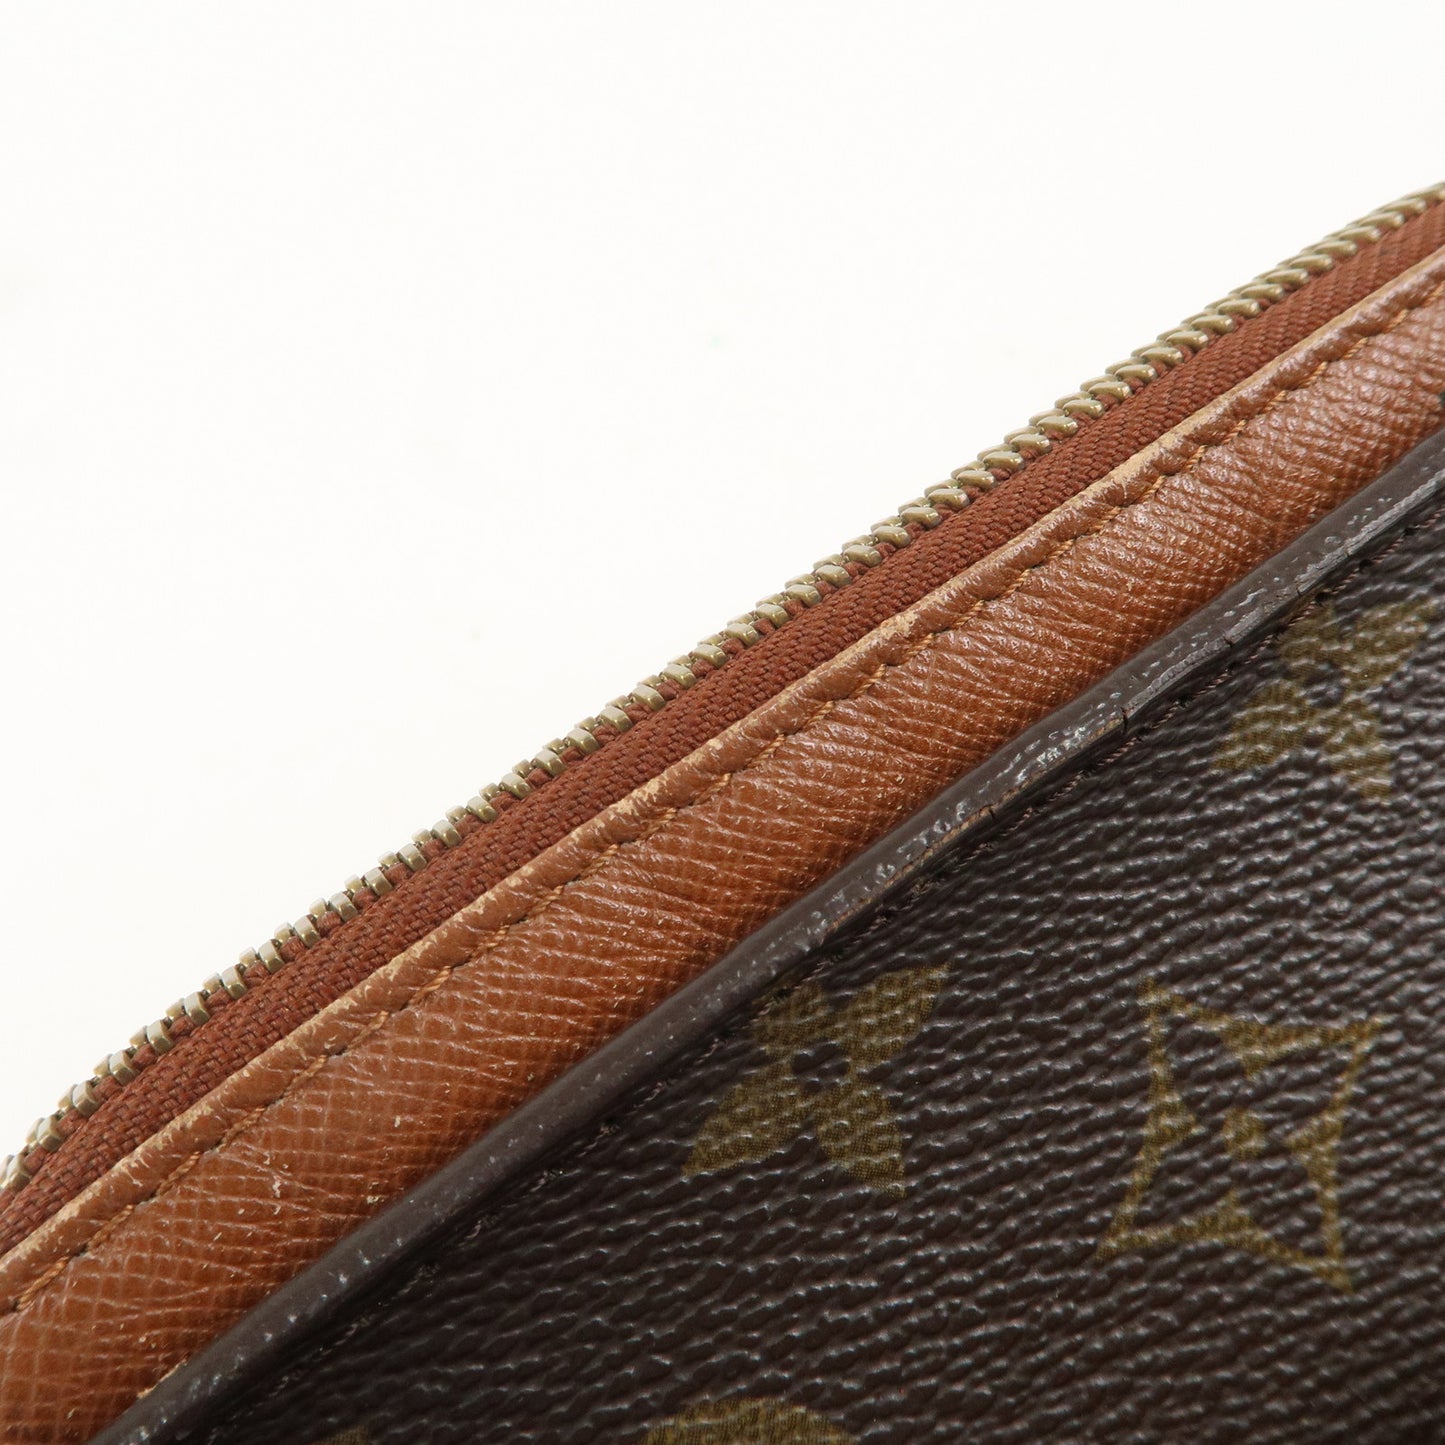 Louis Vuitton Monogram Orsay Clutch Bag Pouch Brown M51790